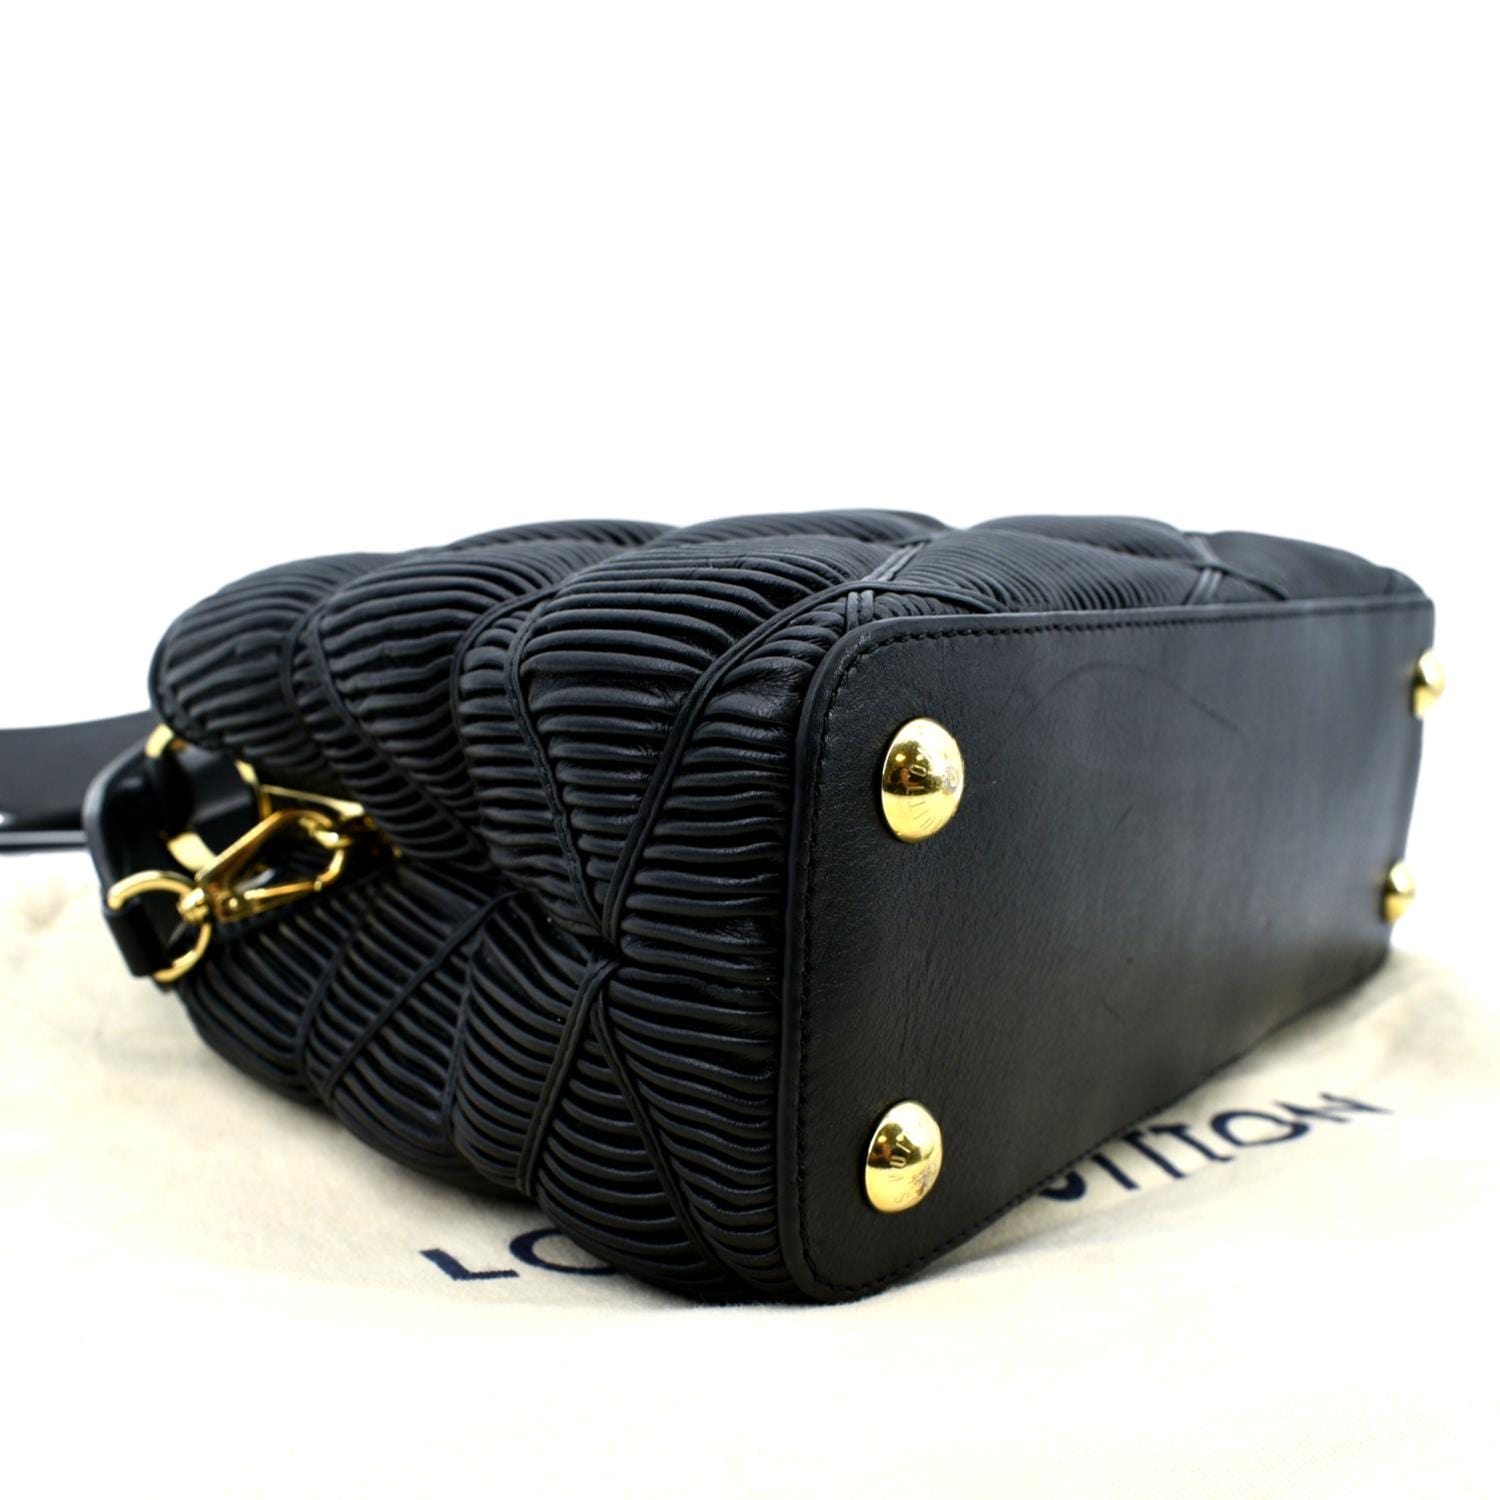 Louis Vuitton Capucines medium model shoulder bag in black leather